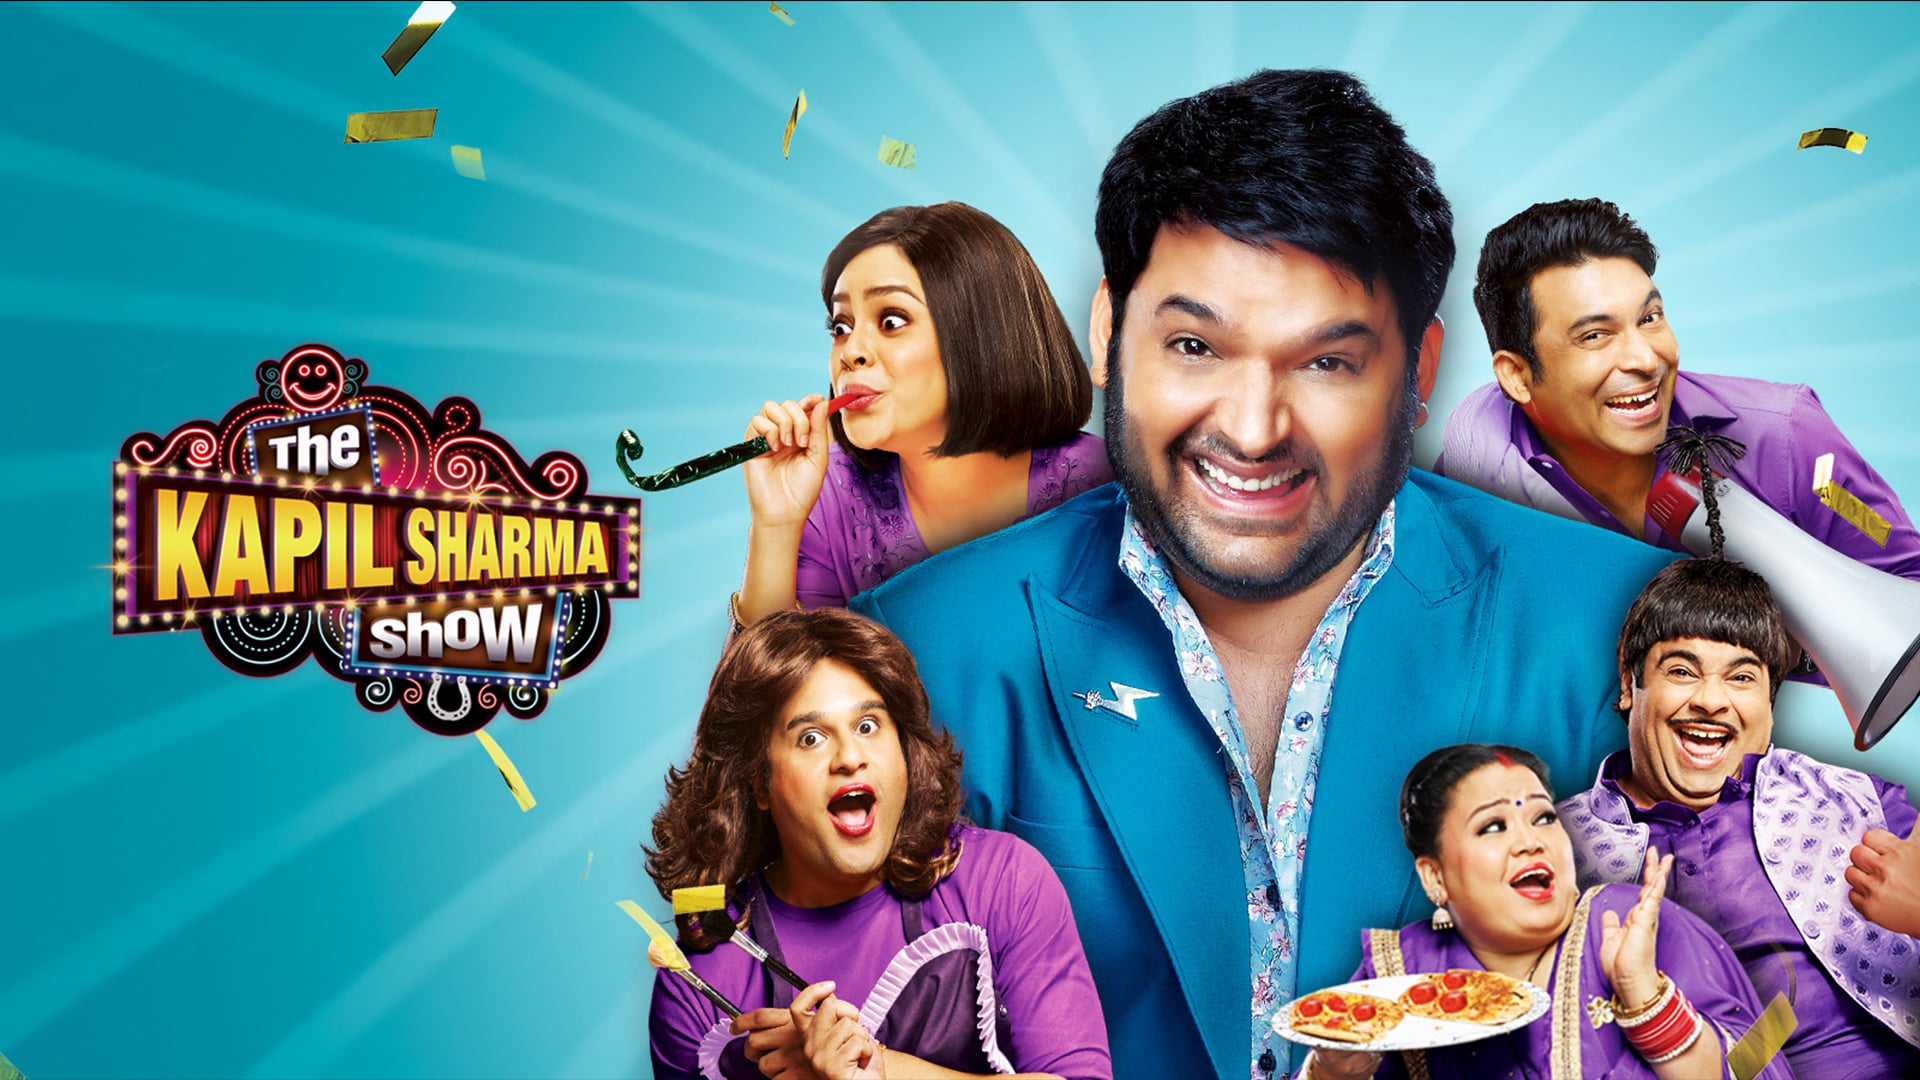 The Kapil Sharma Show - Season 2 Episode 71 : Sushant And Shraddha Share Laughs With Kapil